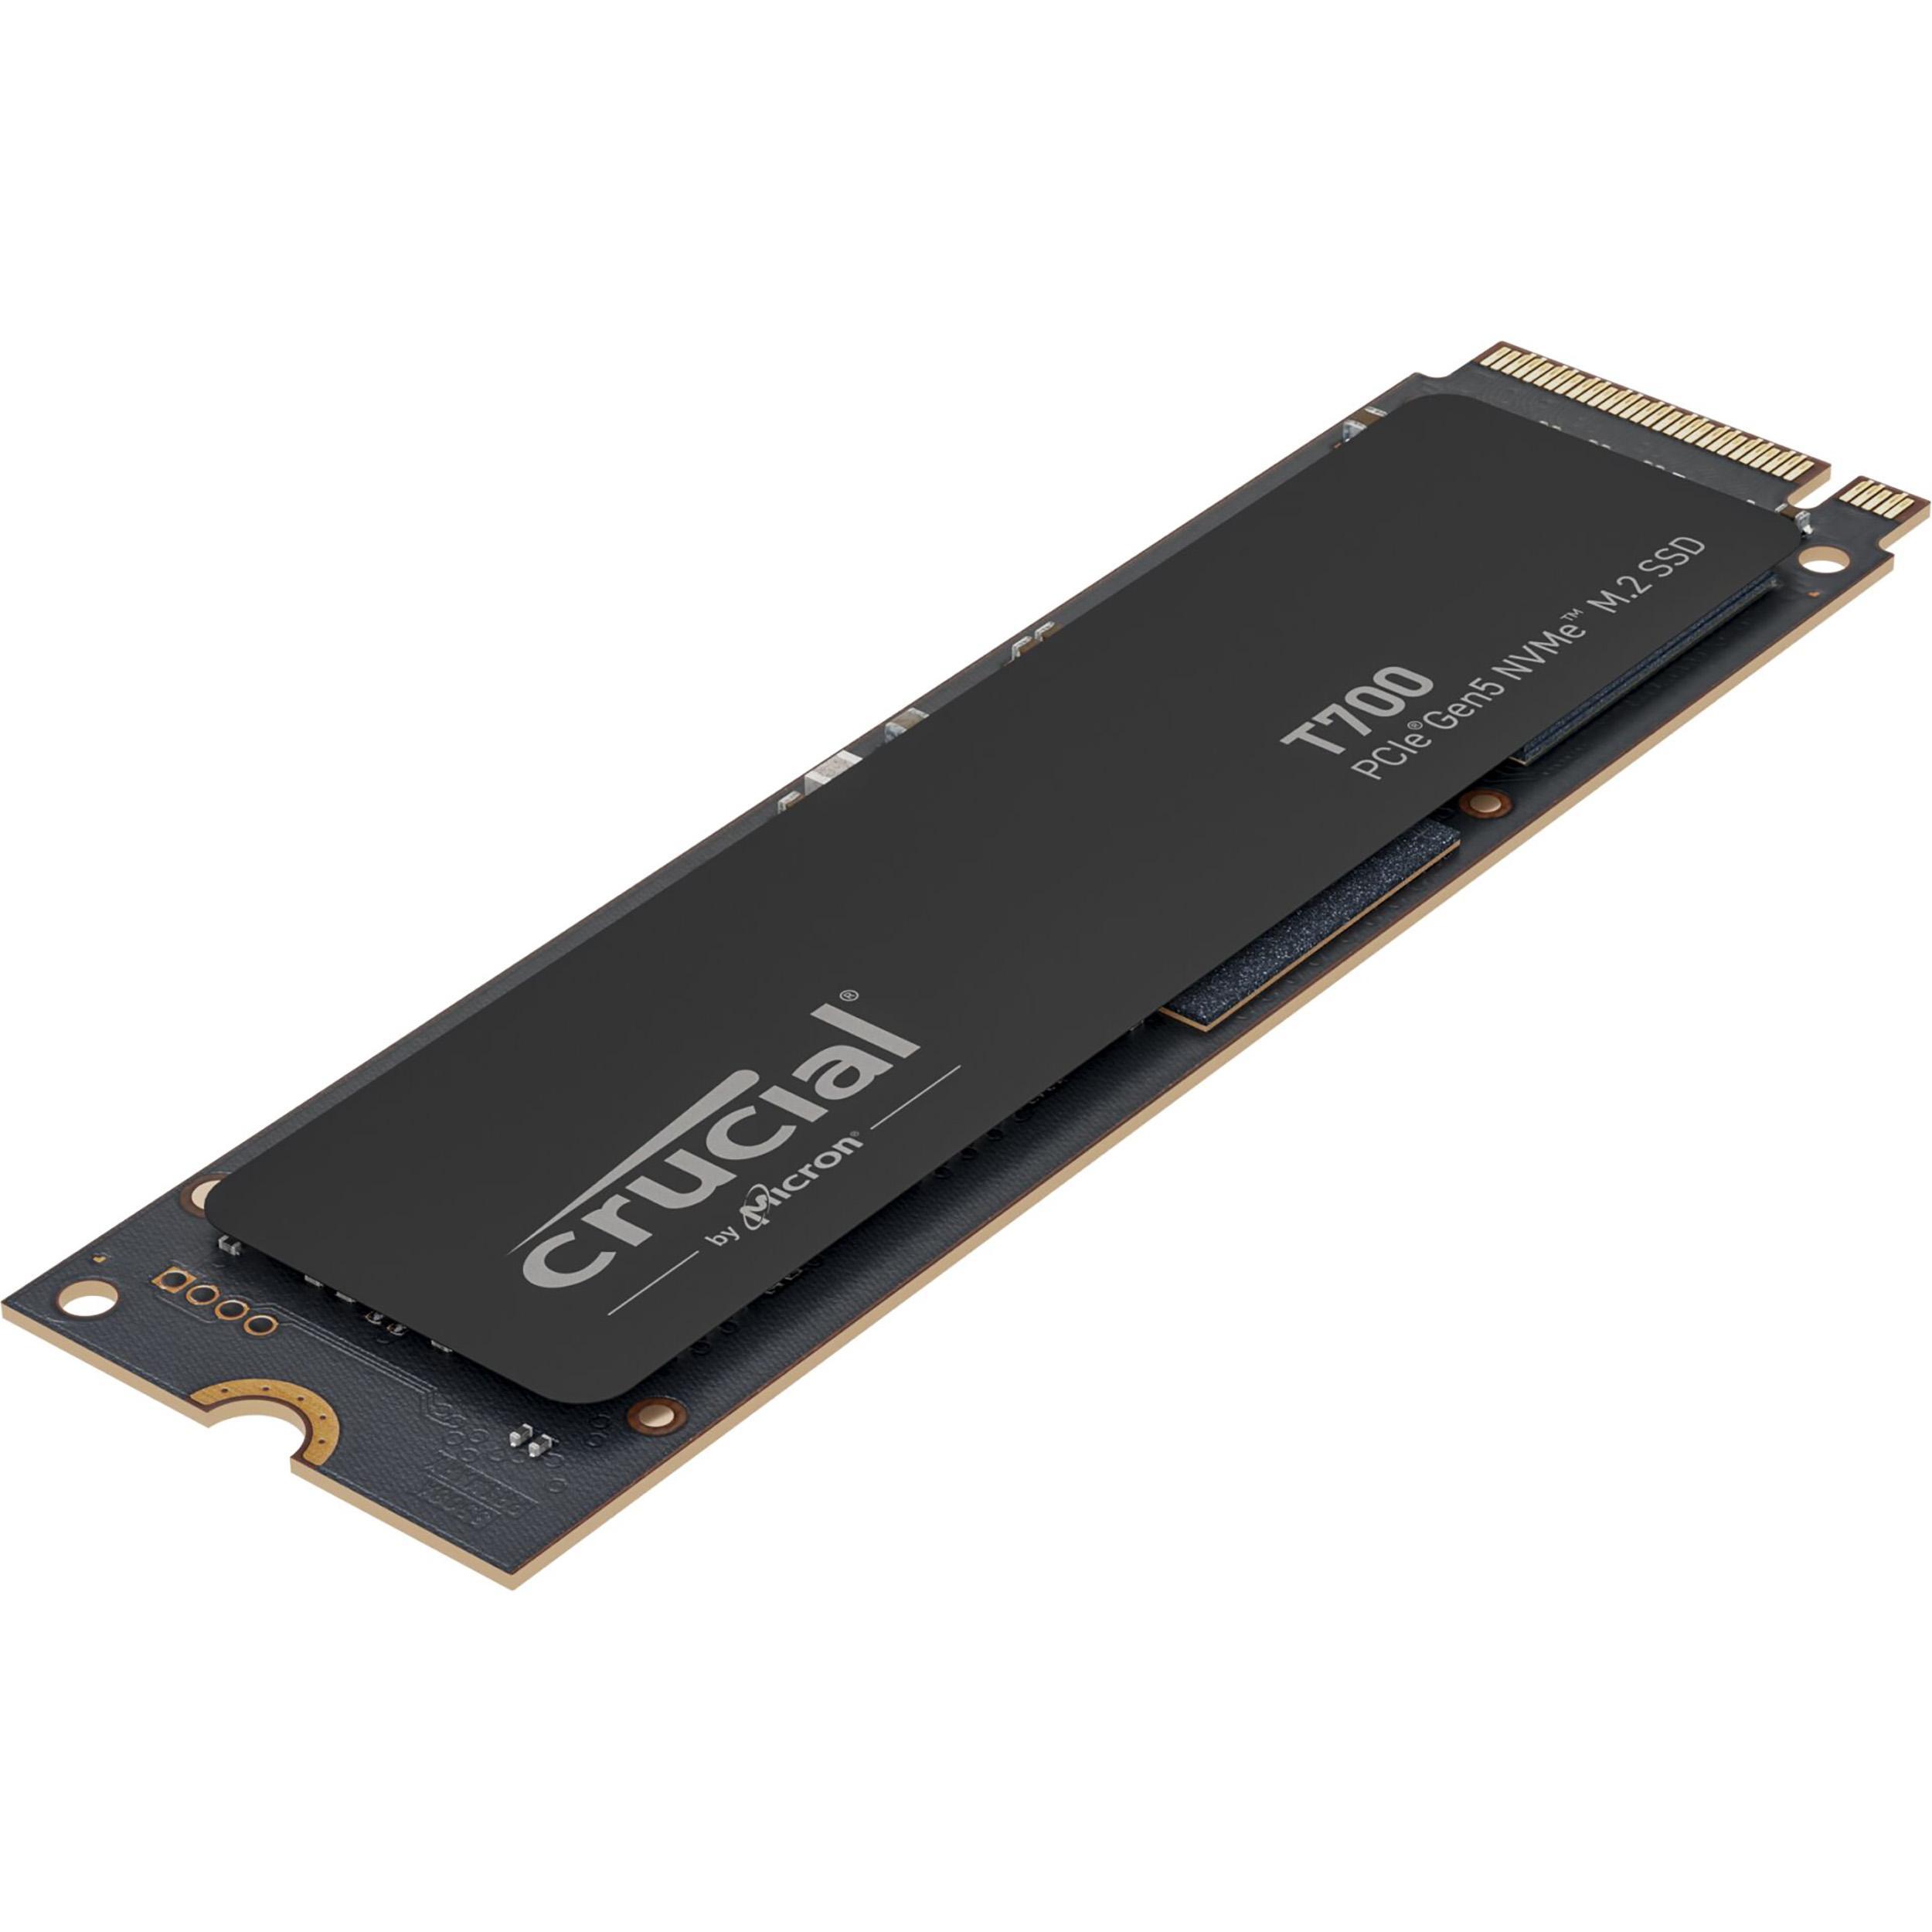 CRUCIAL T700 PCIe Gen5 intern NVMe, 2 TB via SSD SSD, M.2 NVMe